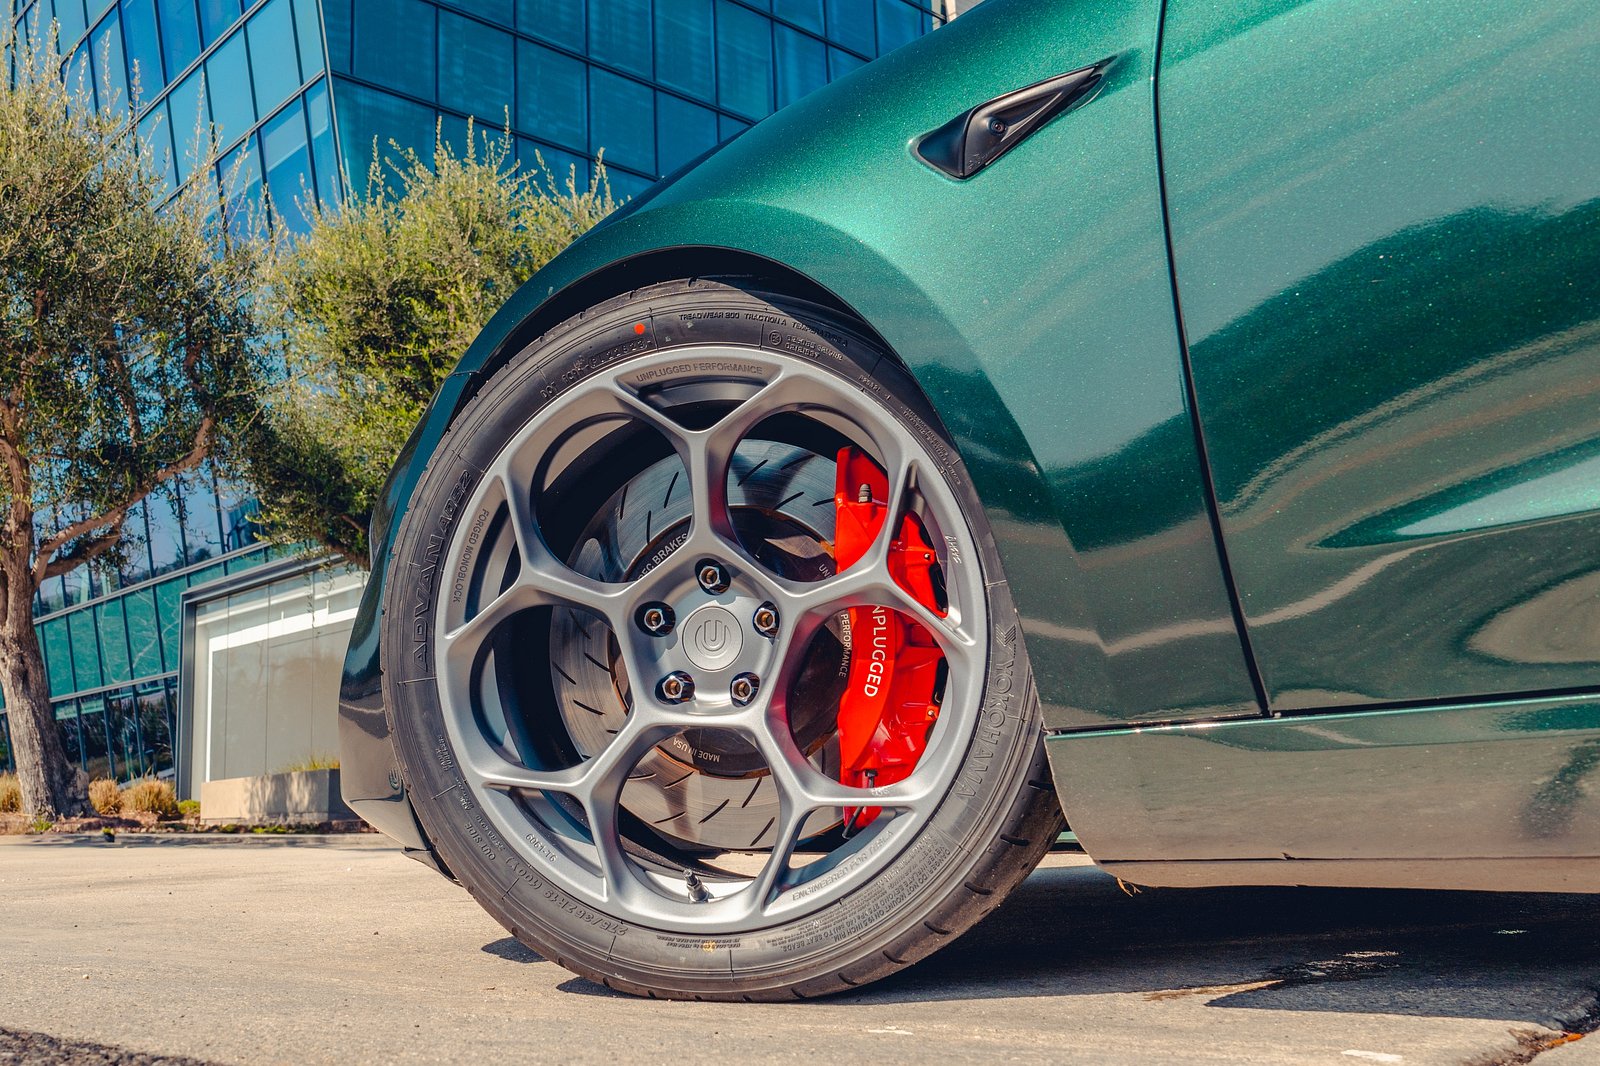 Designer of Koenigsegg Gemera Develops Custom Aftermarket Wheels for Entire Tesla Range